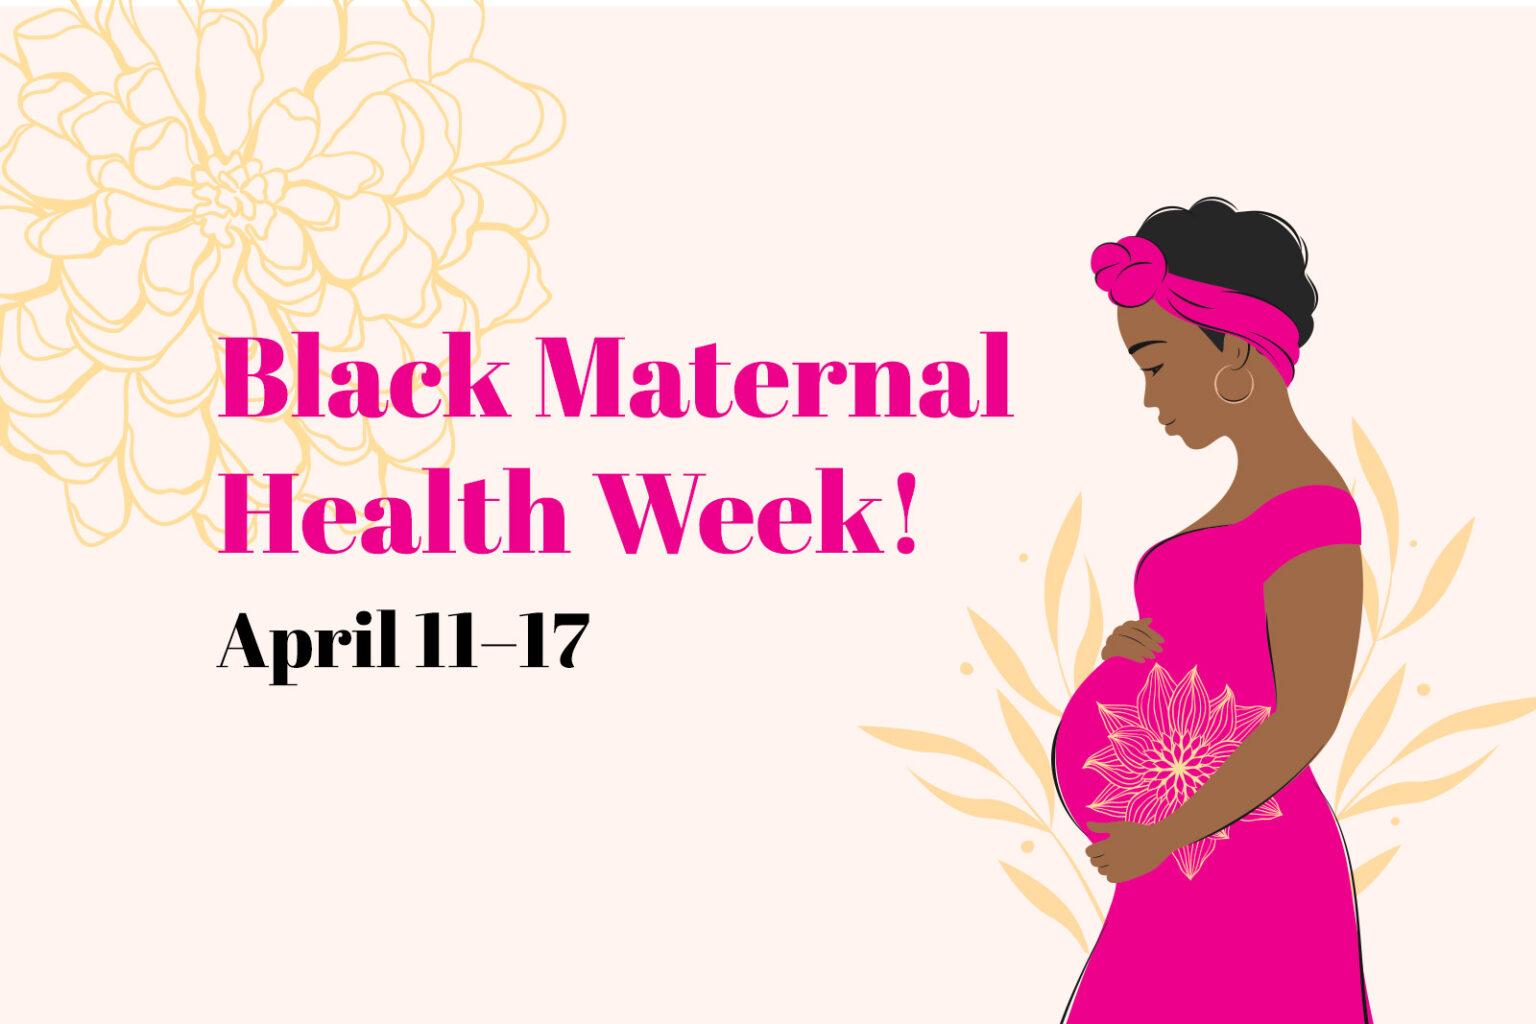 Black Maternal Health Week: Restoring Black Autonomy and Joy!